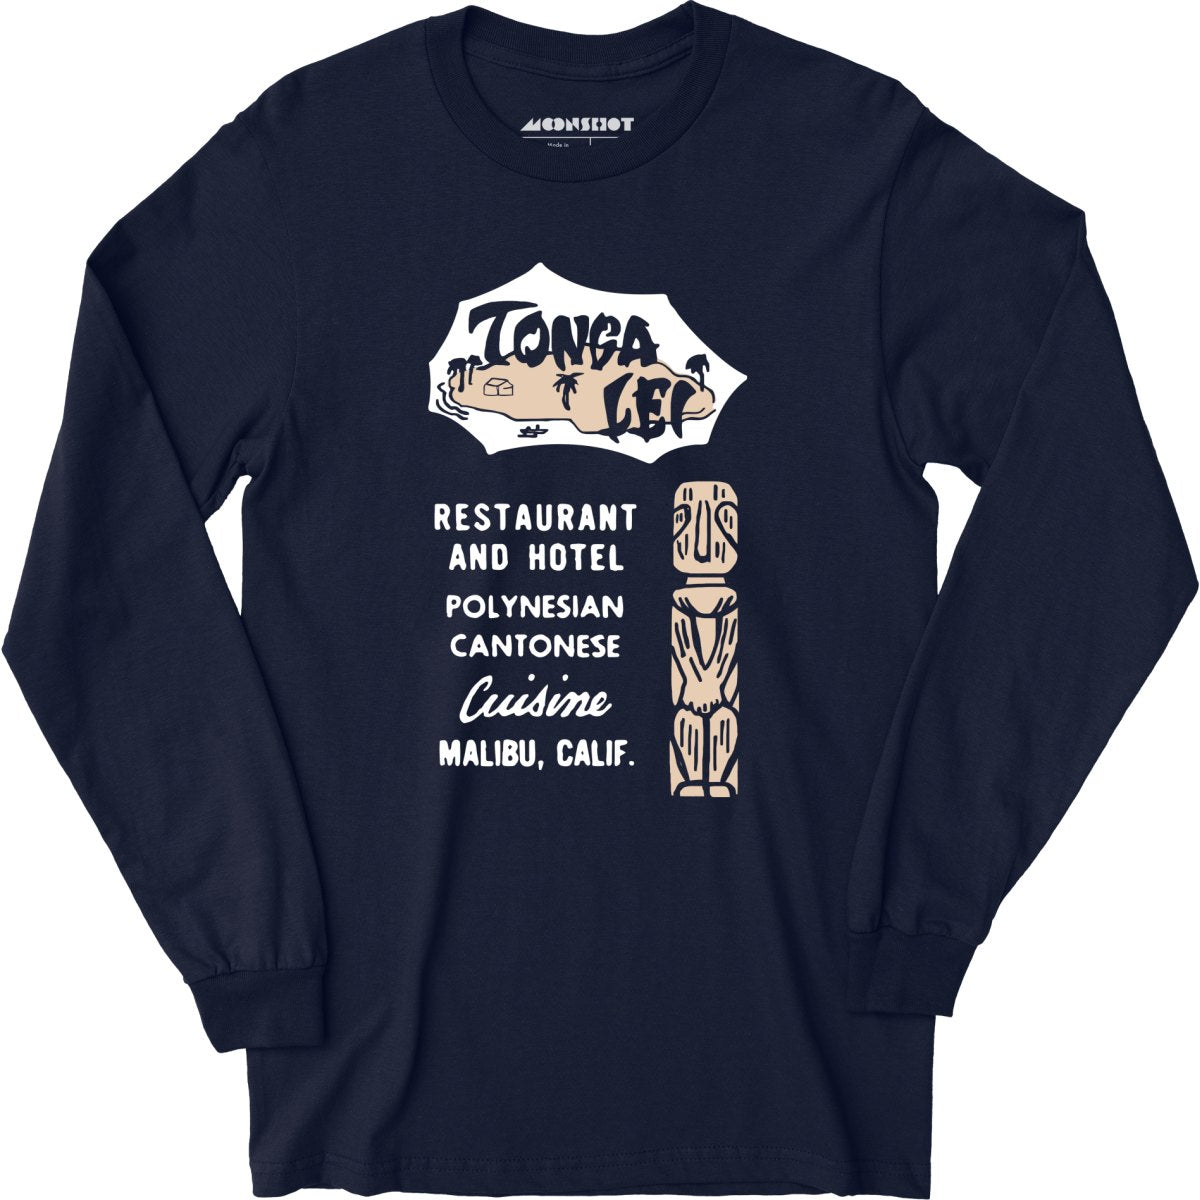 Tonga Lei v2 - Malibu, CA - Vintage Tiki Bar - Long Sleeve T-Shirt